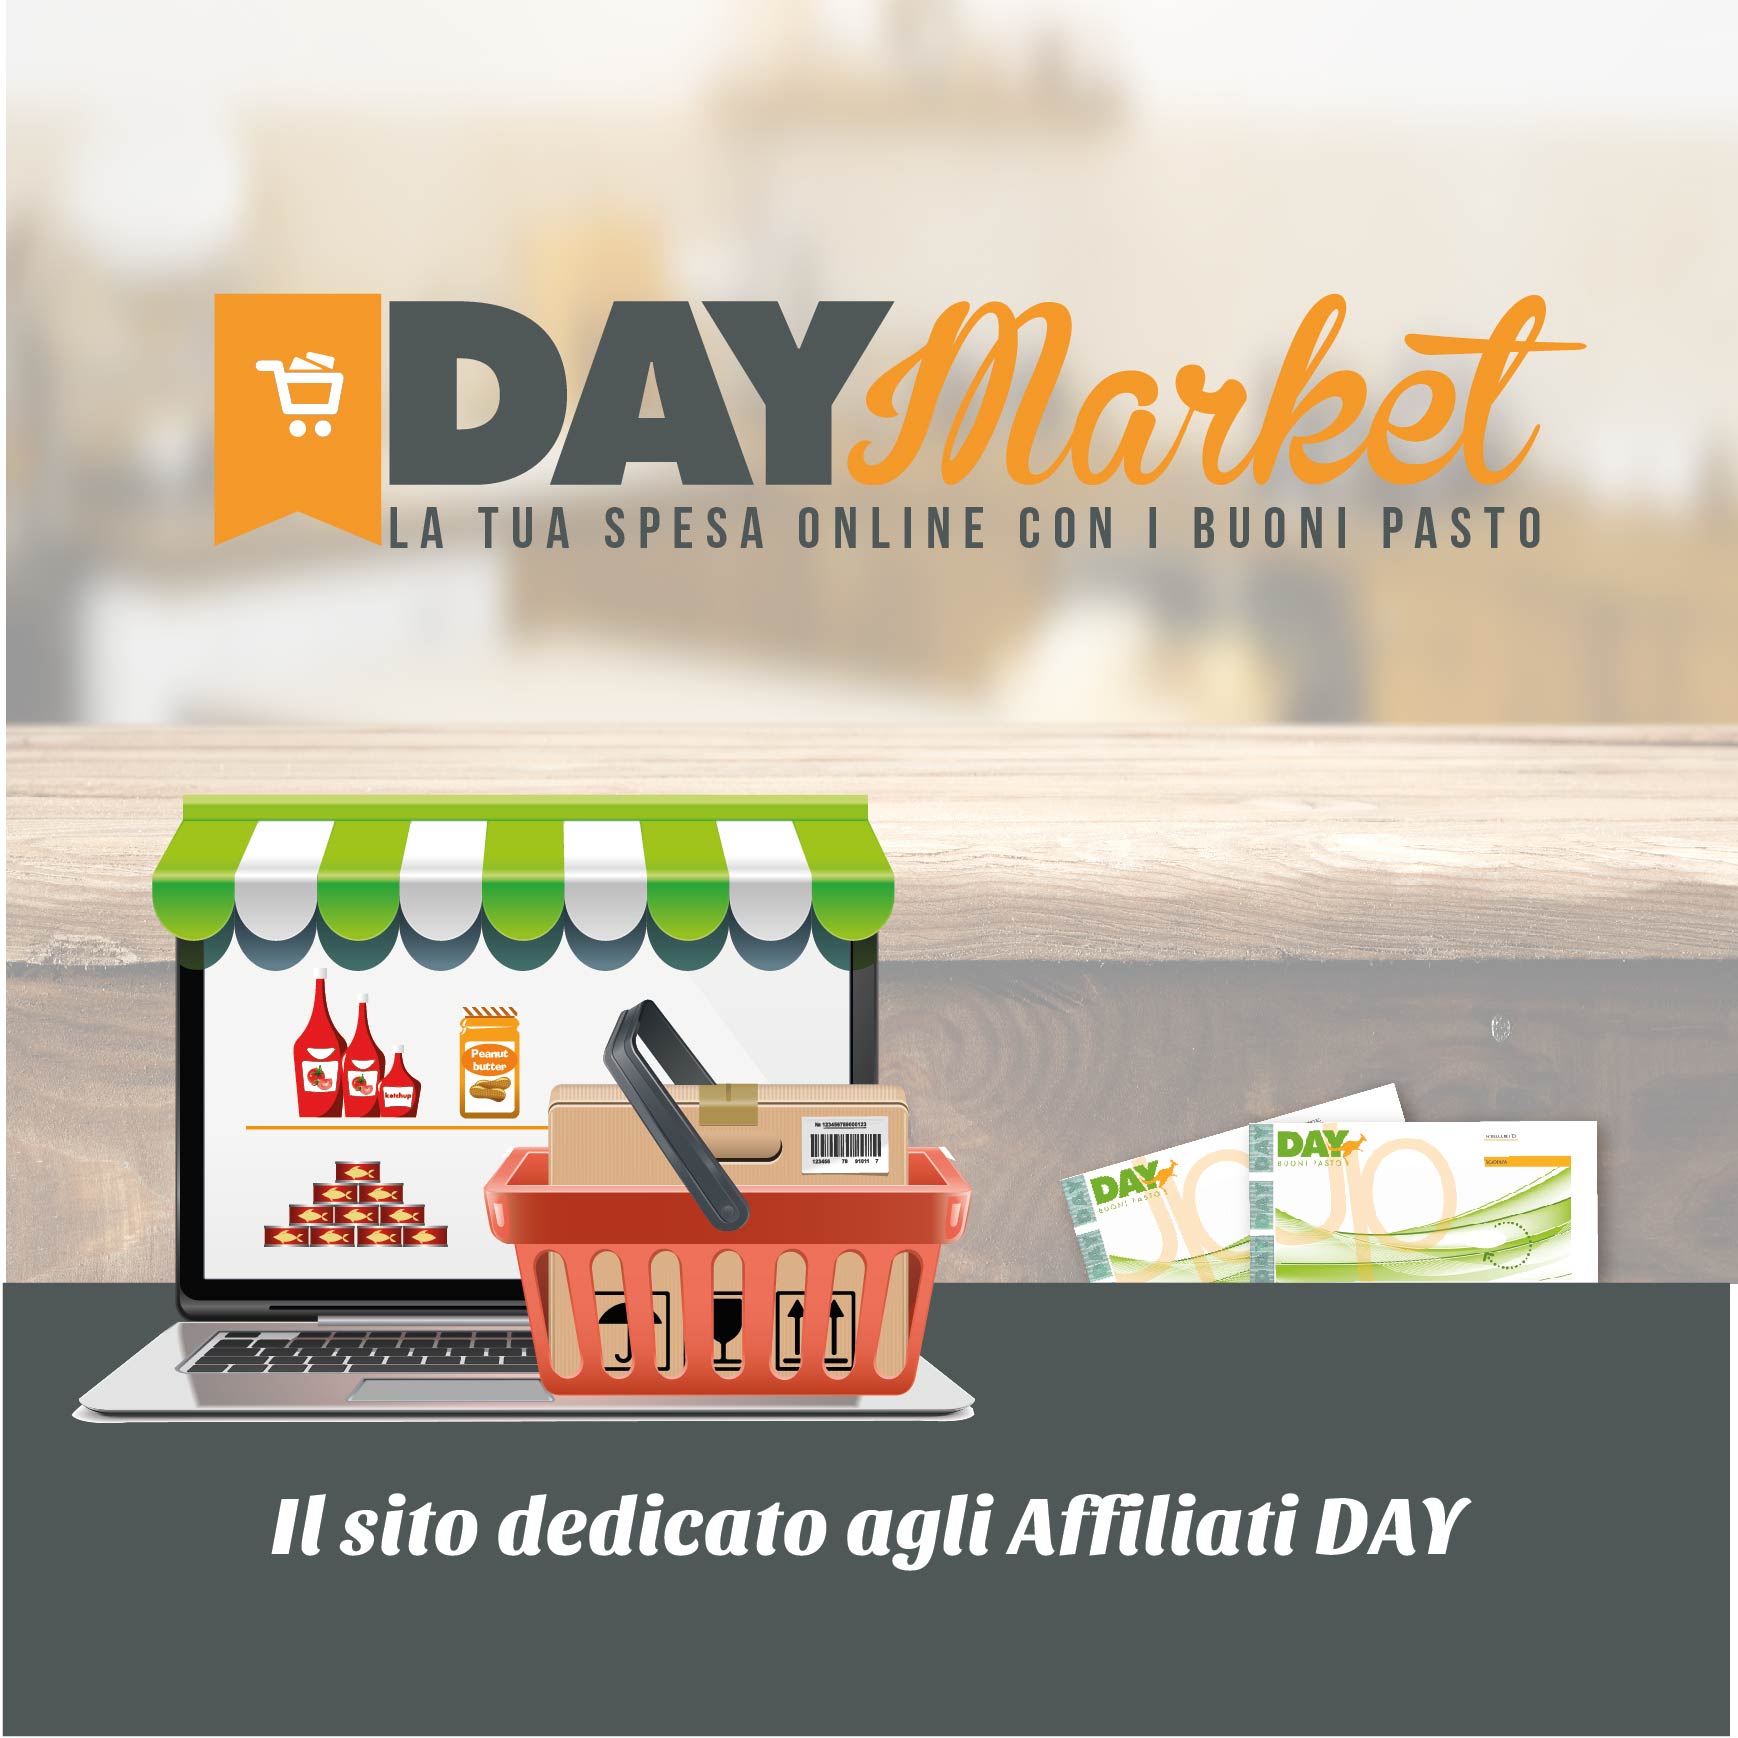 Day Market, e-commerce per esercizi affiliati